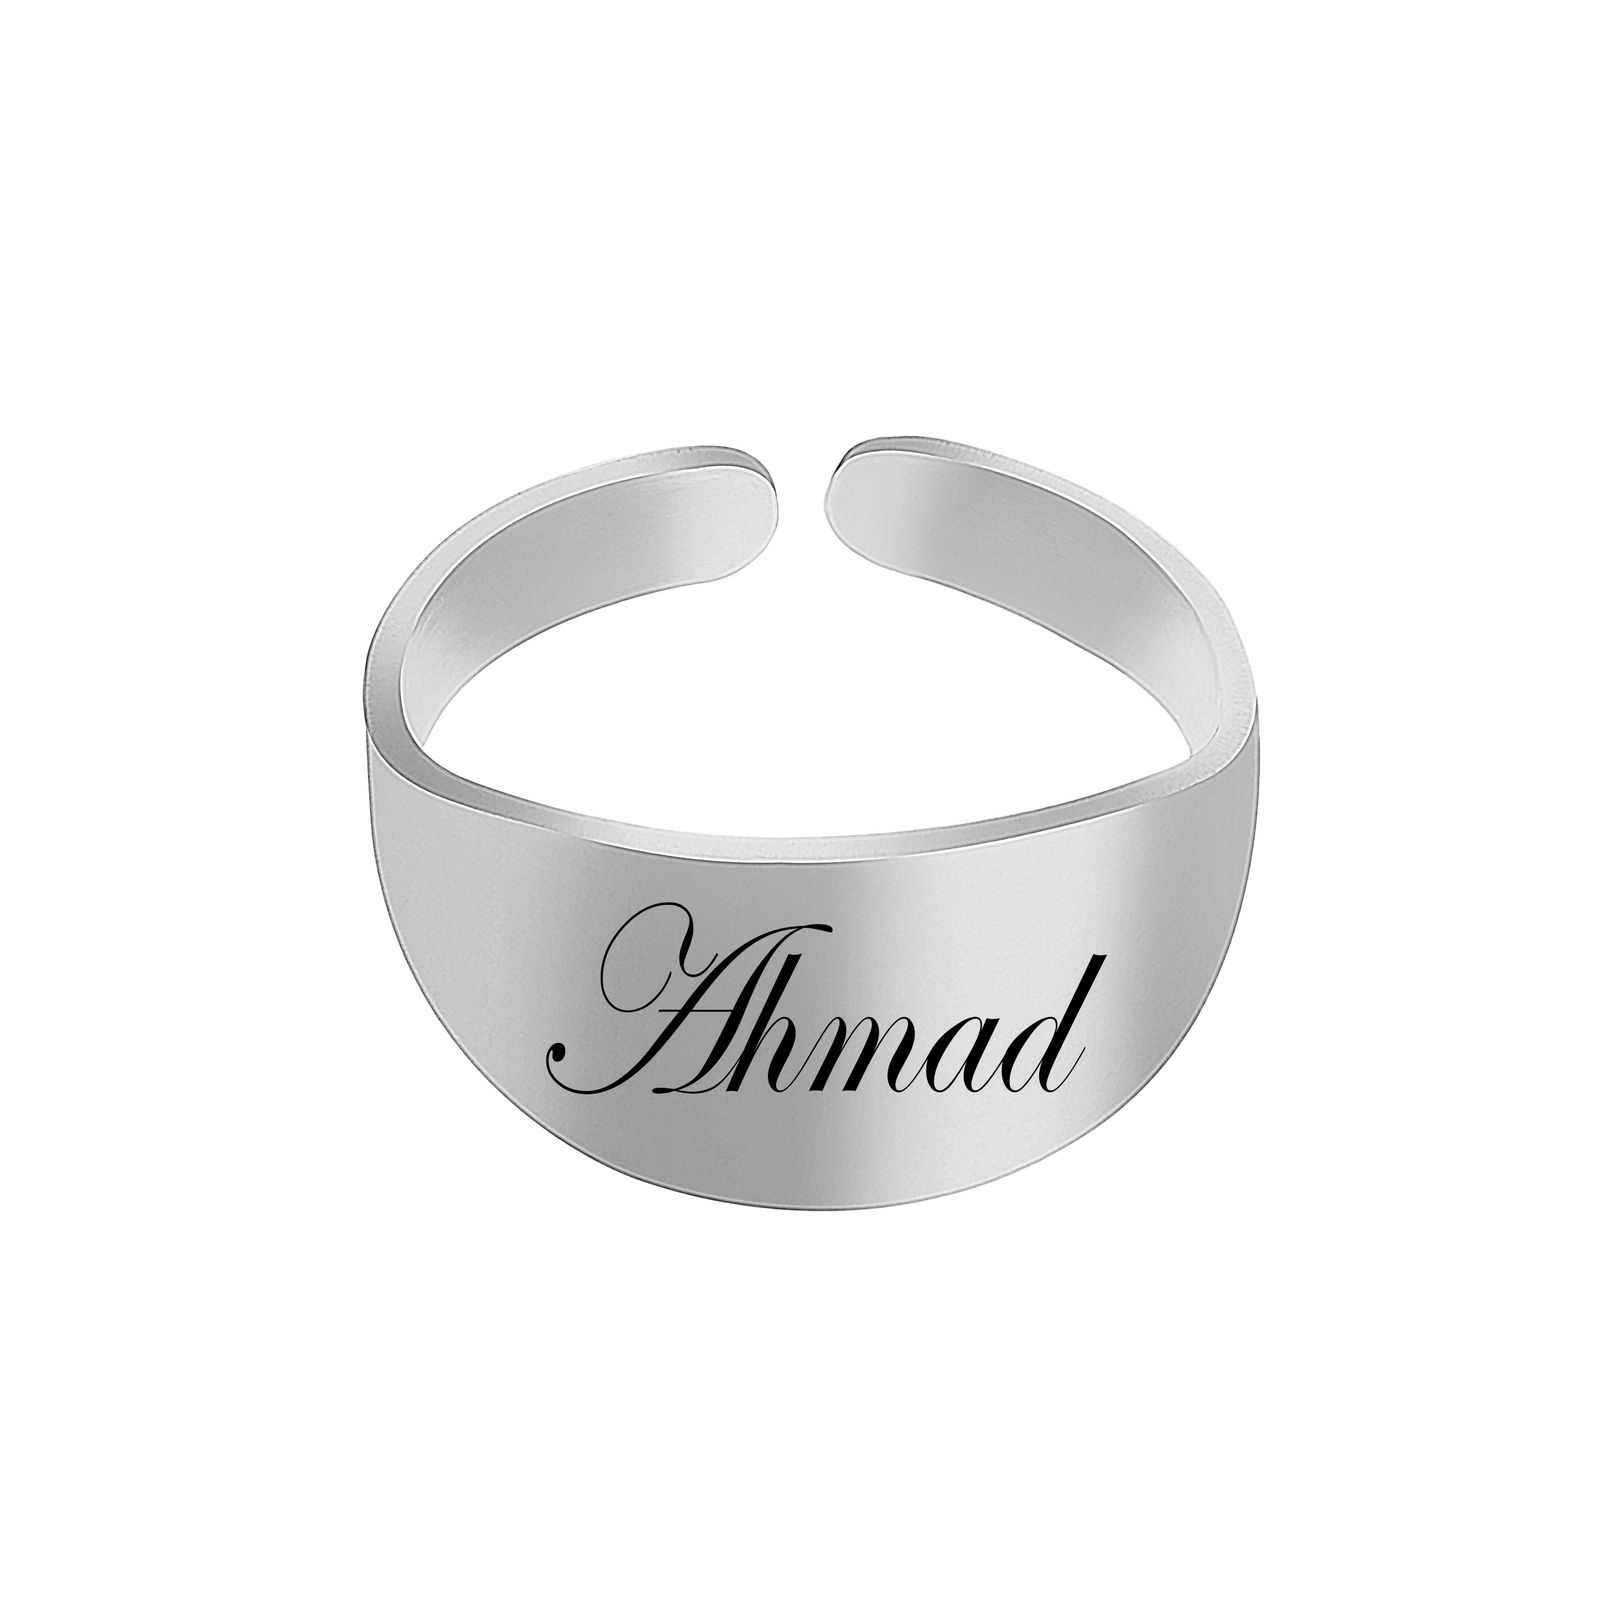 انگشتر مردانه لیردا مدل اسم احمد astl 0026 -  - 1